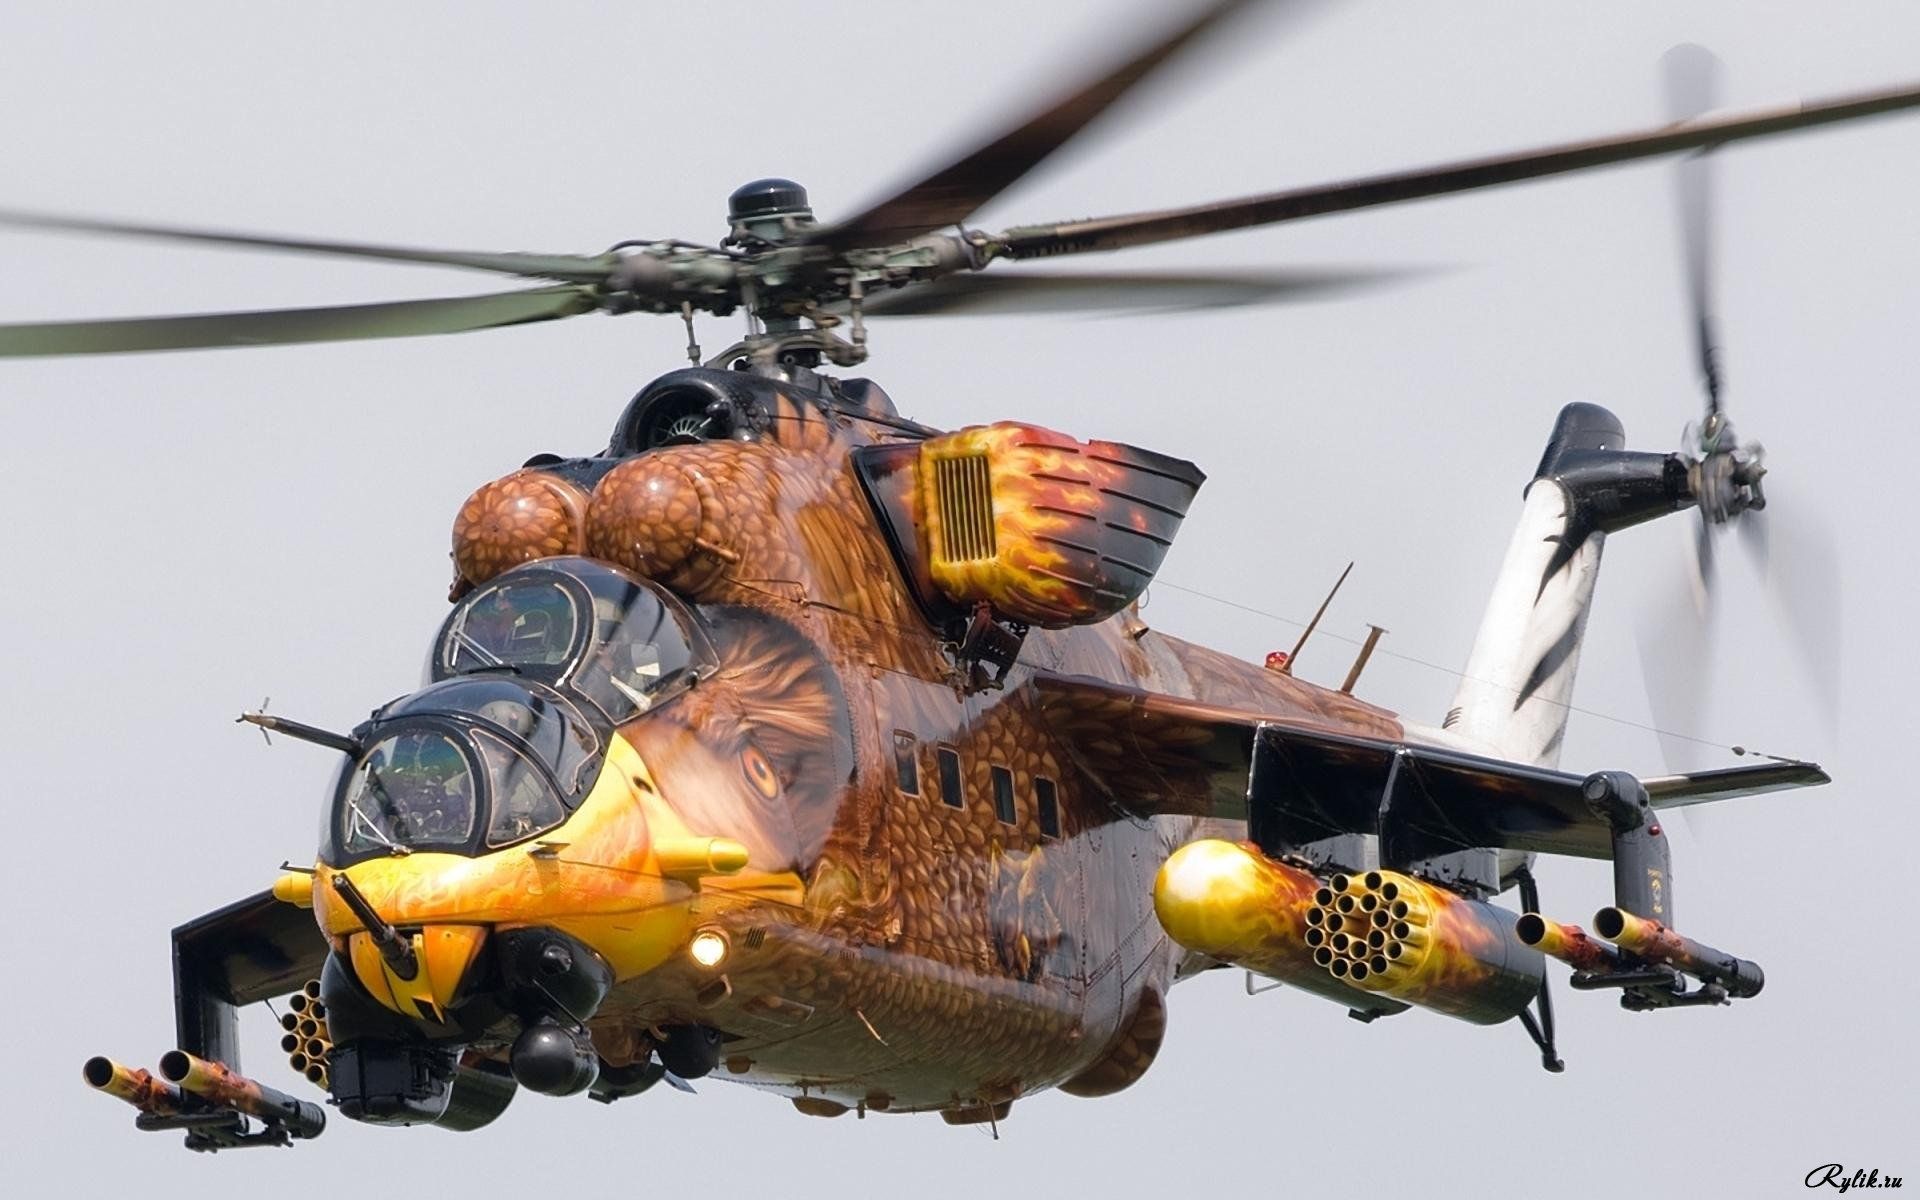 Download wallpaper: combat, helicopter, photo, for desktop